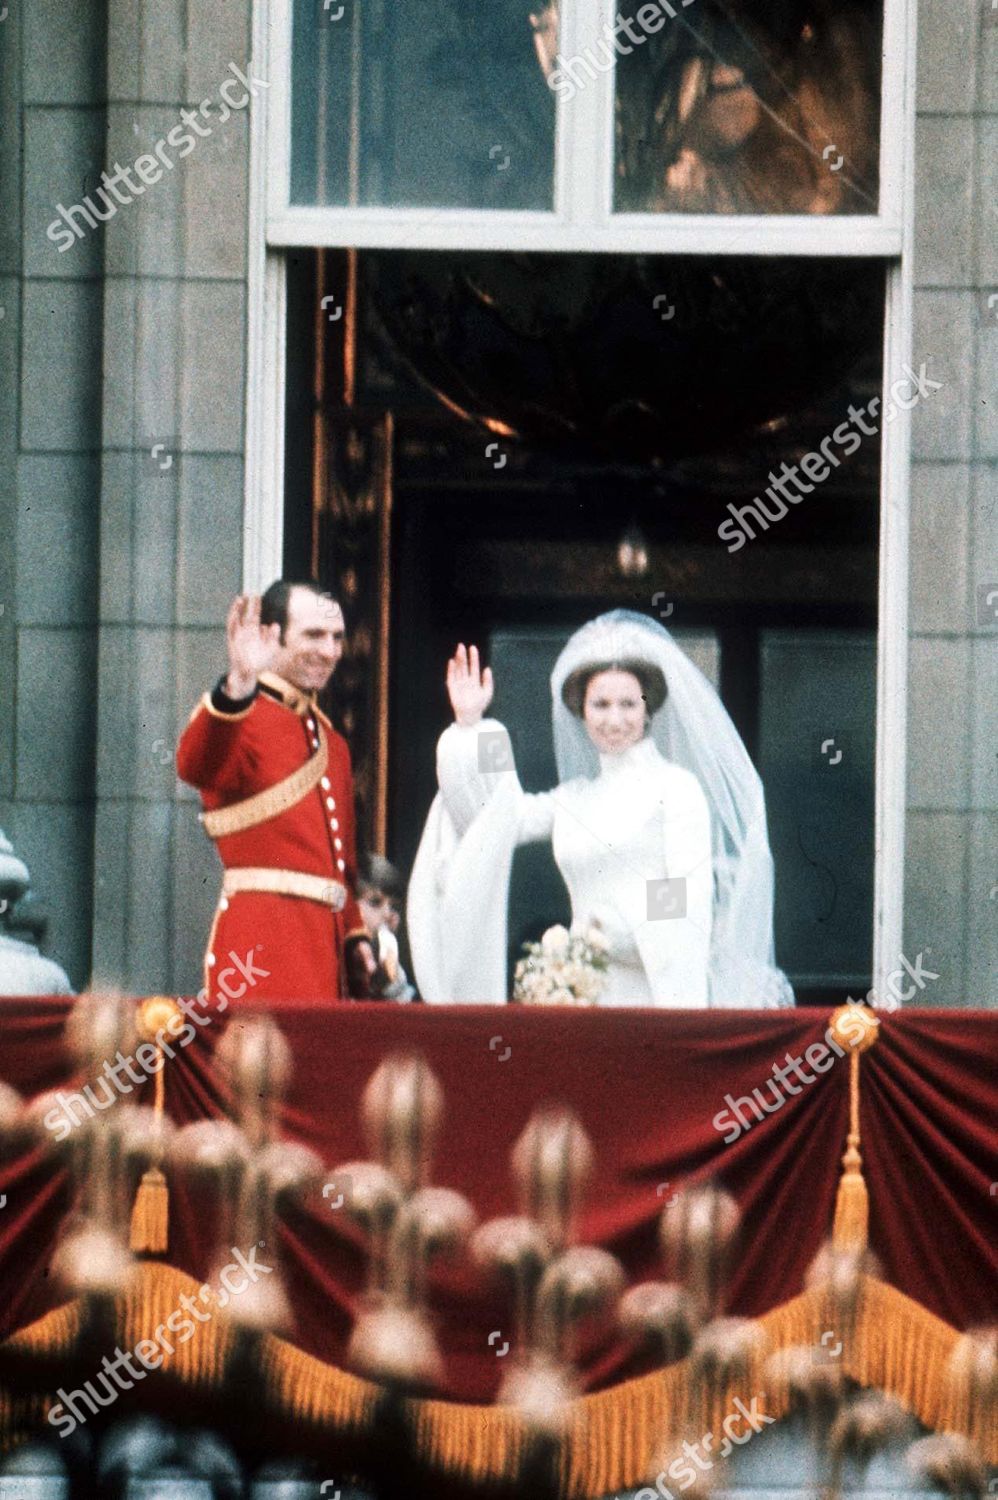 princess-anne-wedding-to-mark-phillips-london-britain-shutterstock-editorial-47031a.jpg